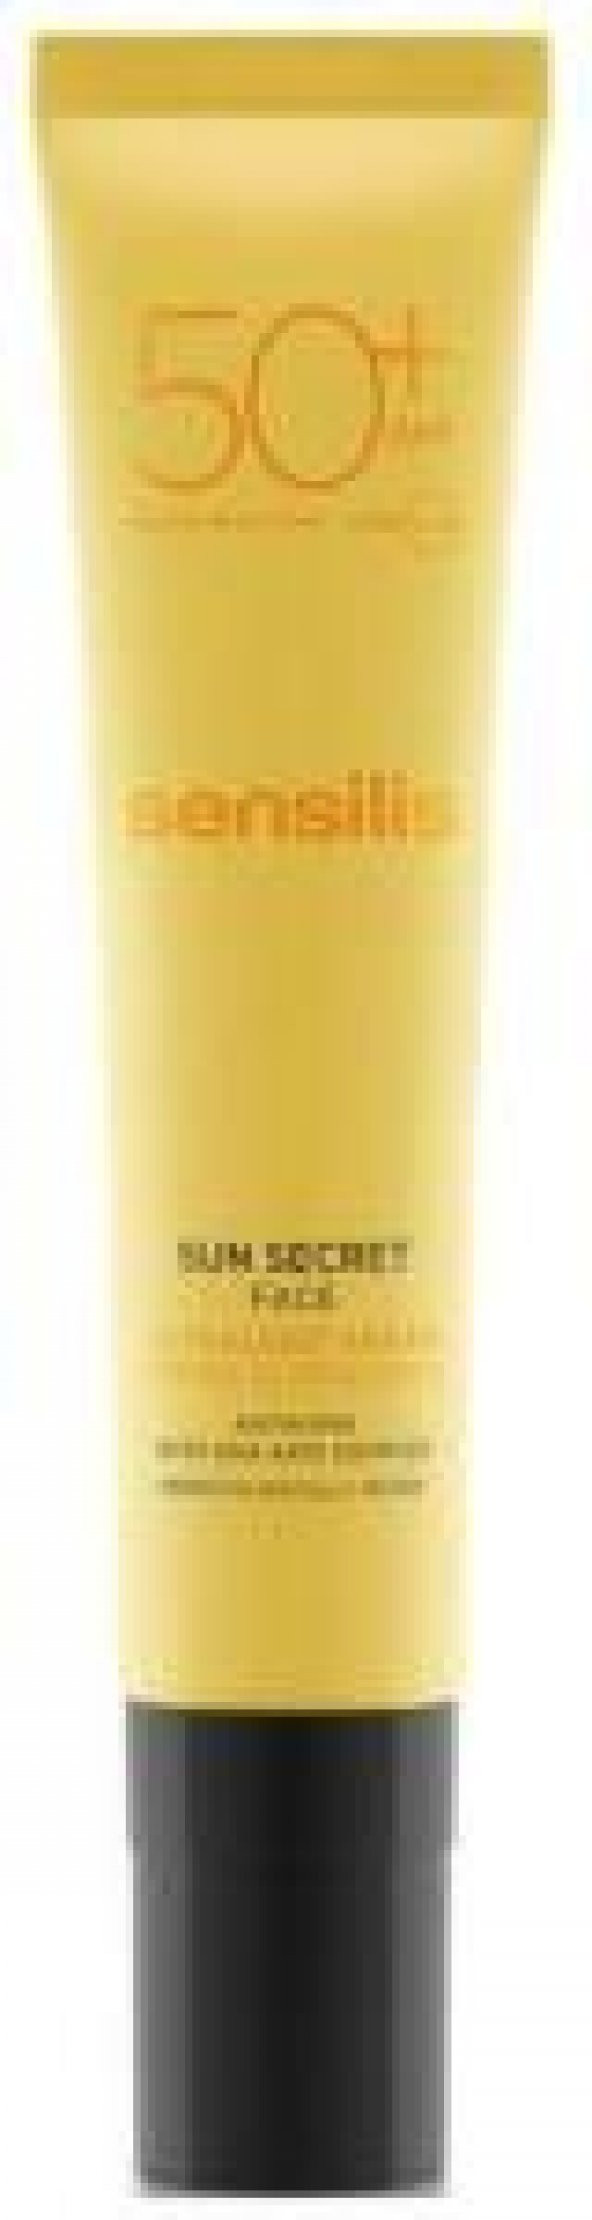 Sensilis Sun Secret Face Spf 50+ Ultralight Cream 40 ml